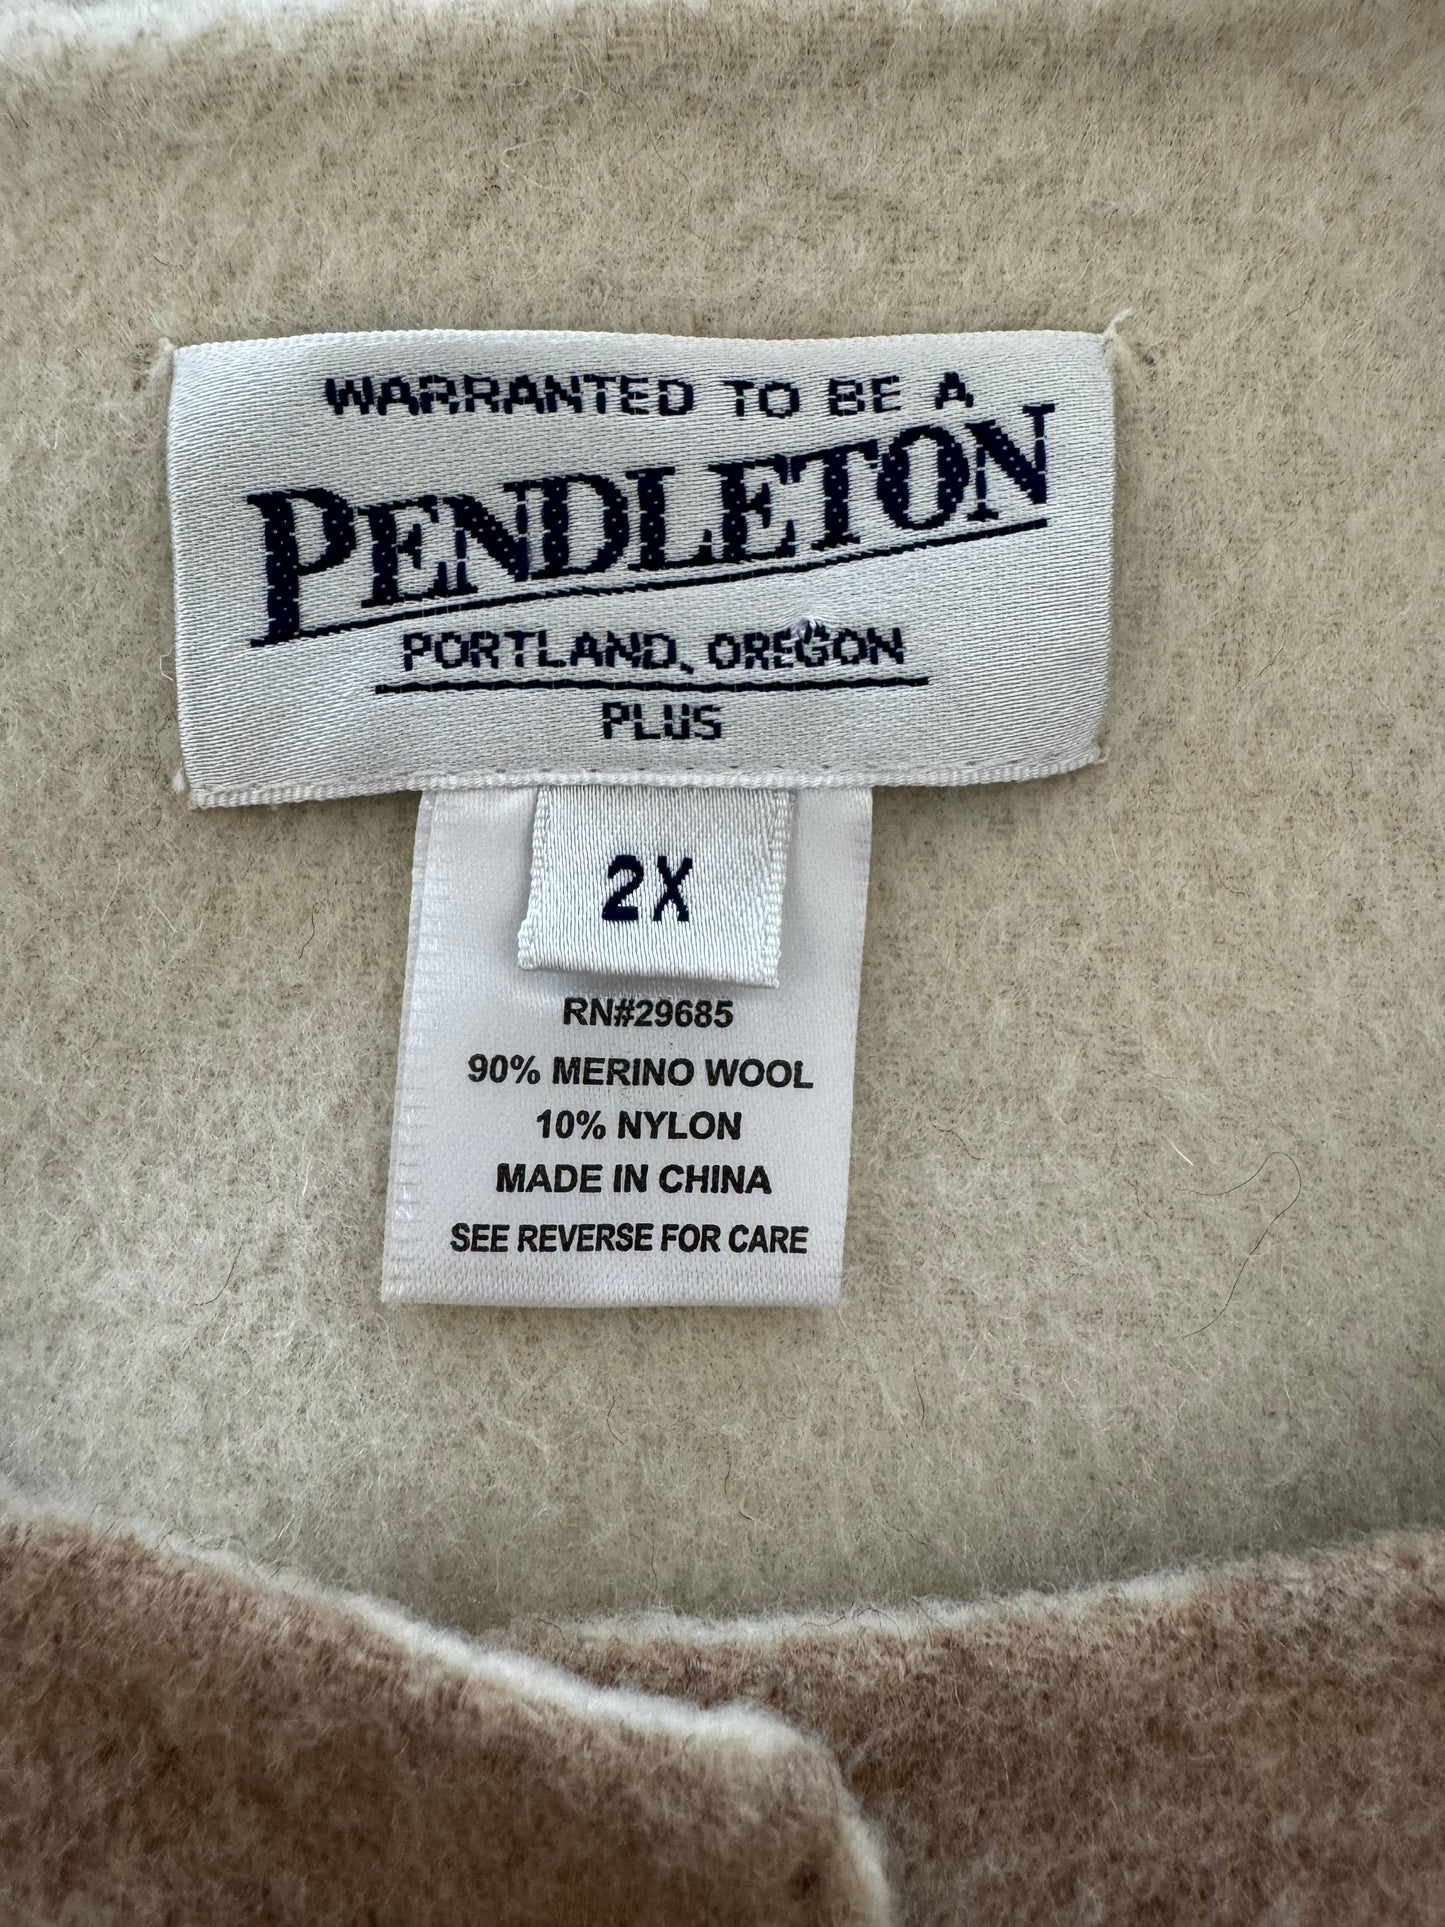 Pendleton